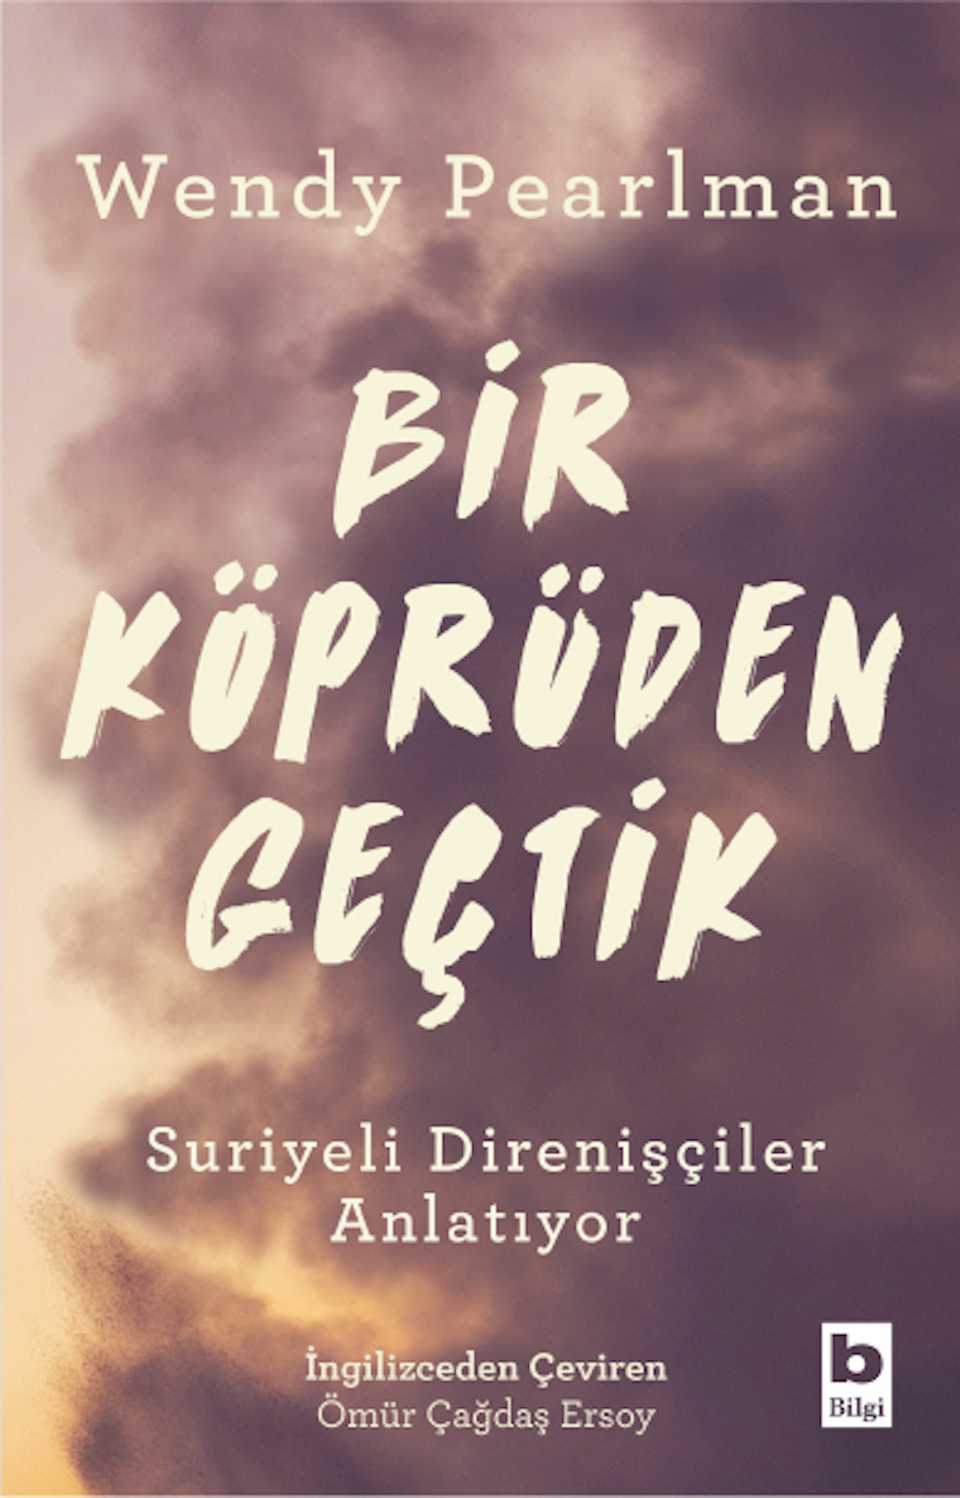 Pearlman's book is out in Turkish as 'Bir Kopruden Gectik'.